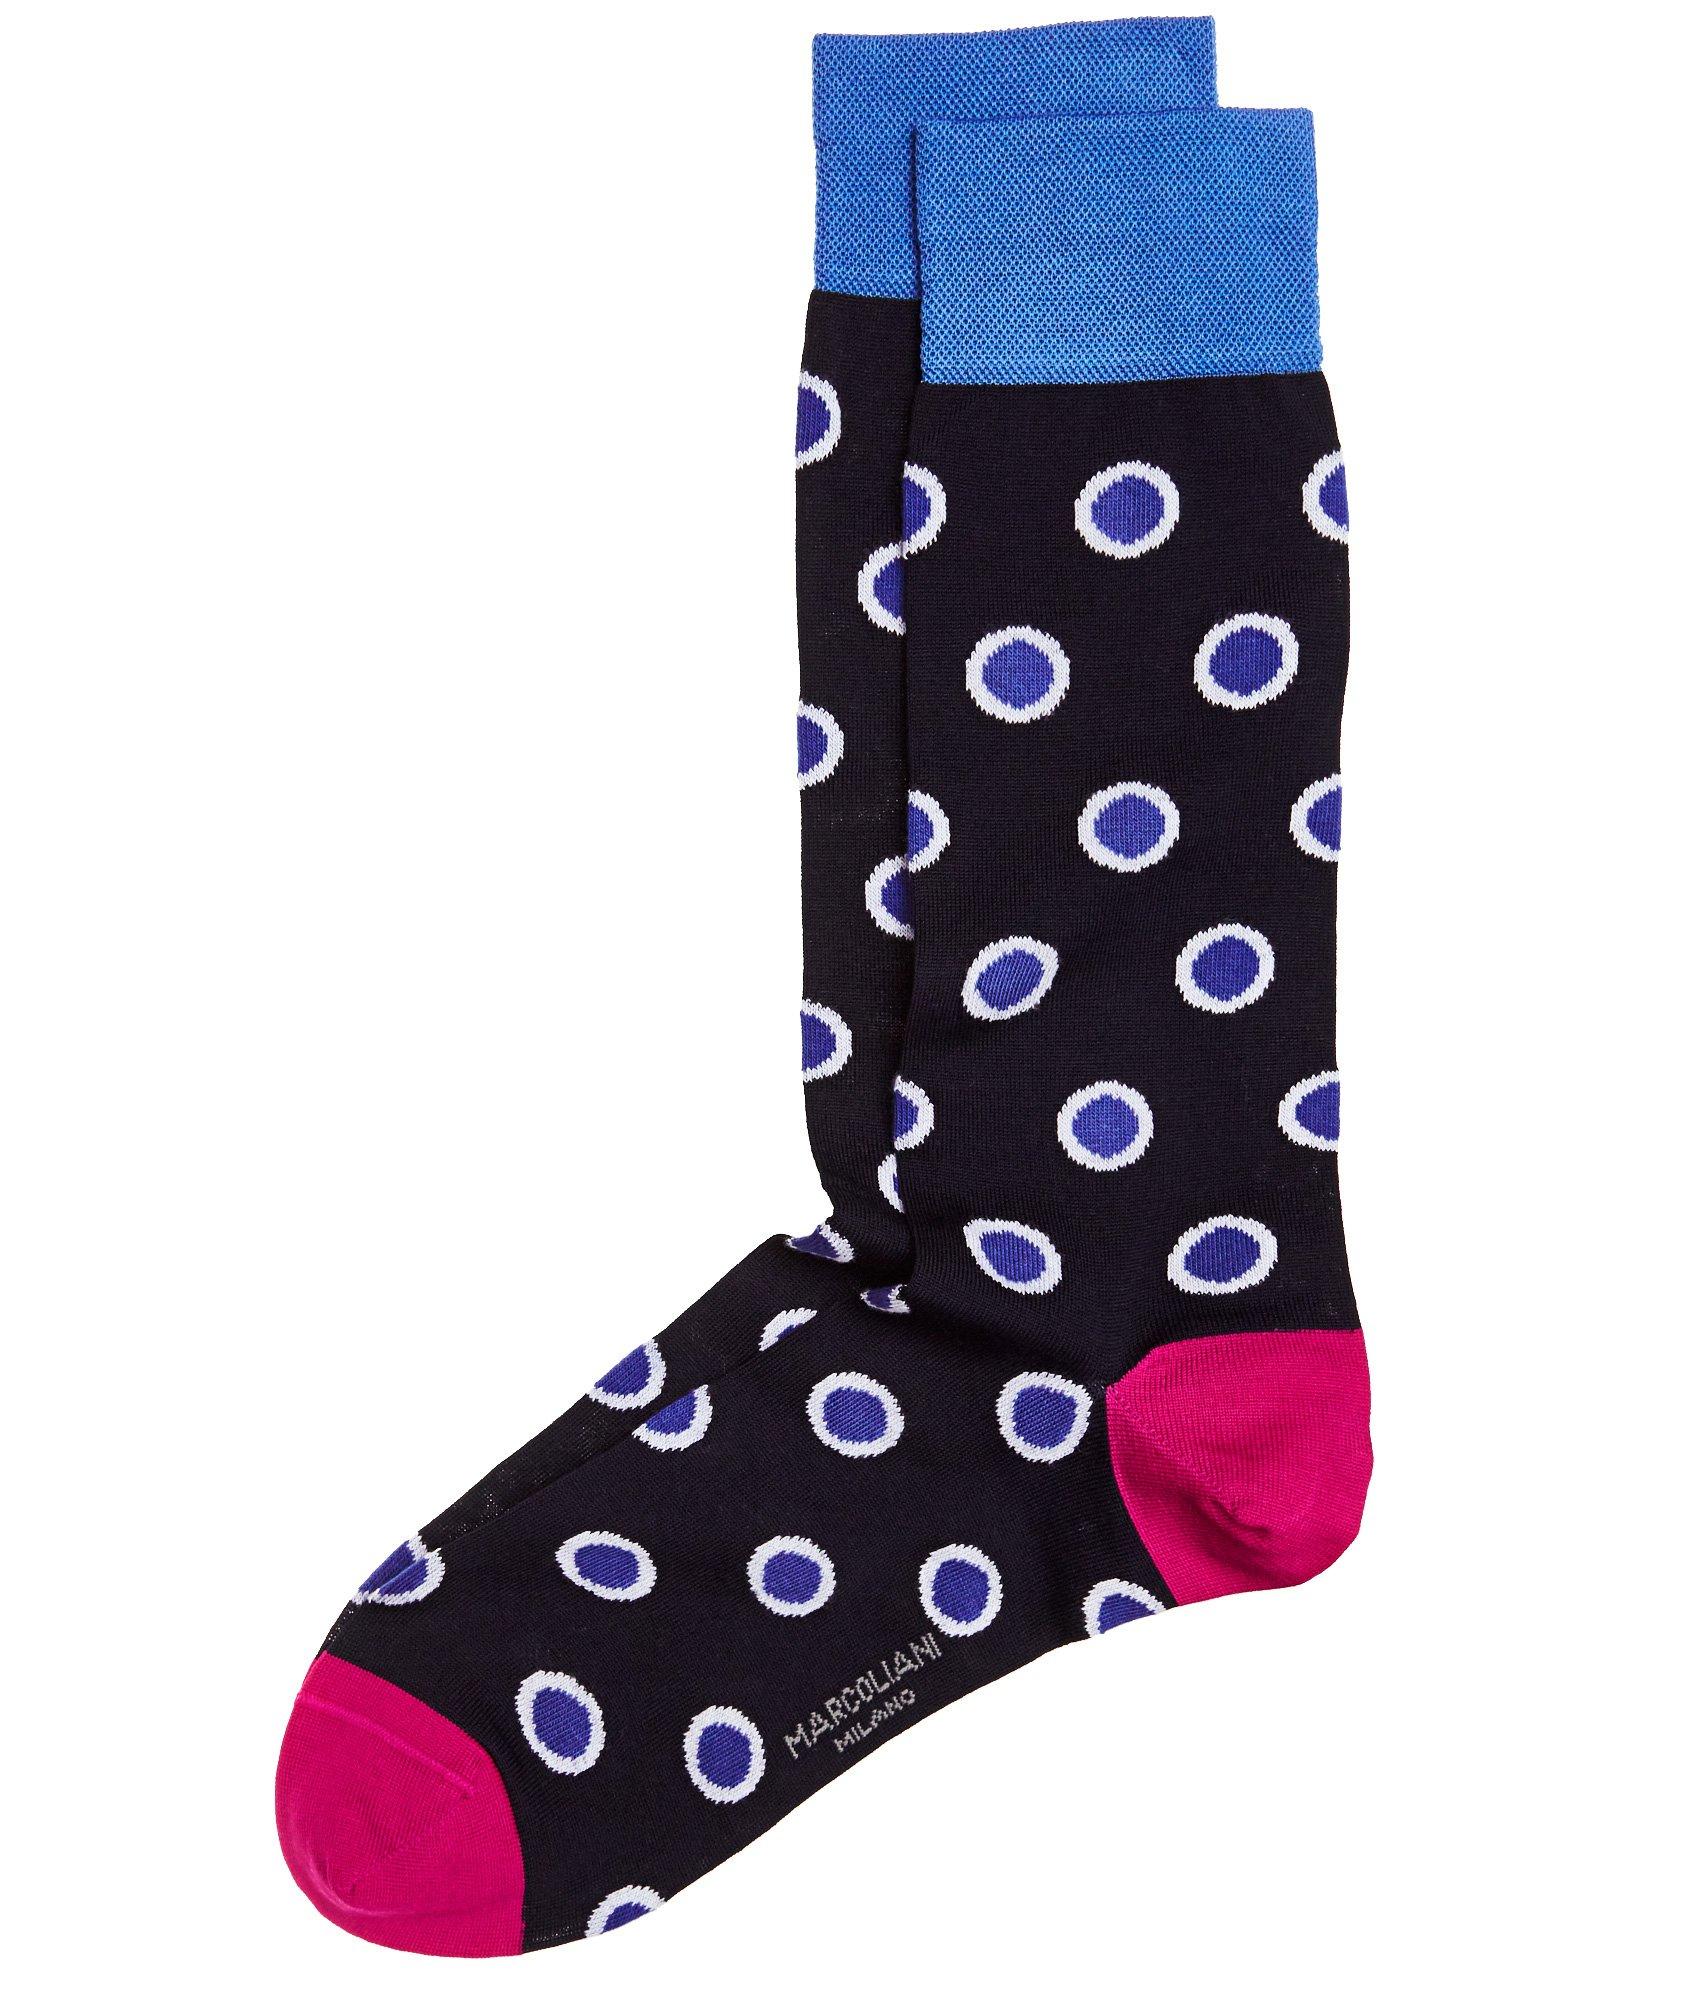 Printed Stretch Cotton Socks image 0